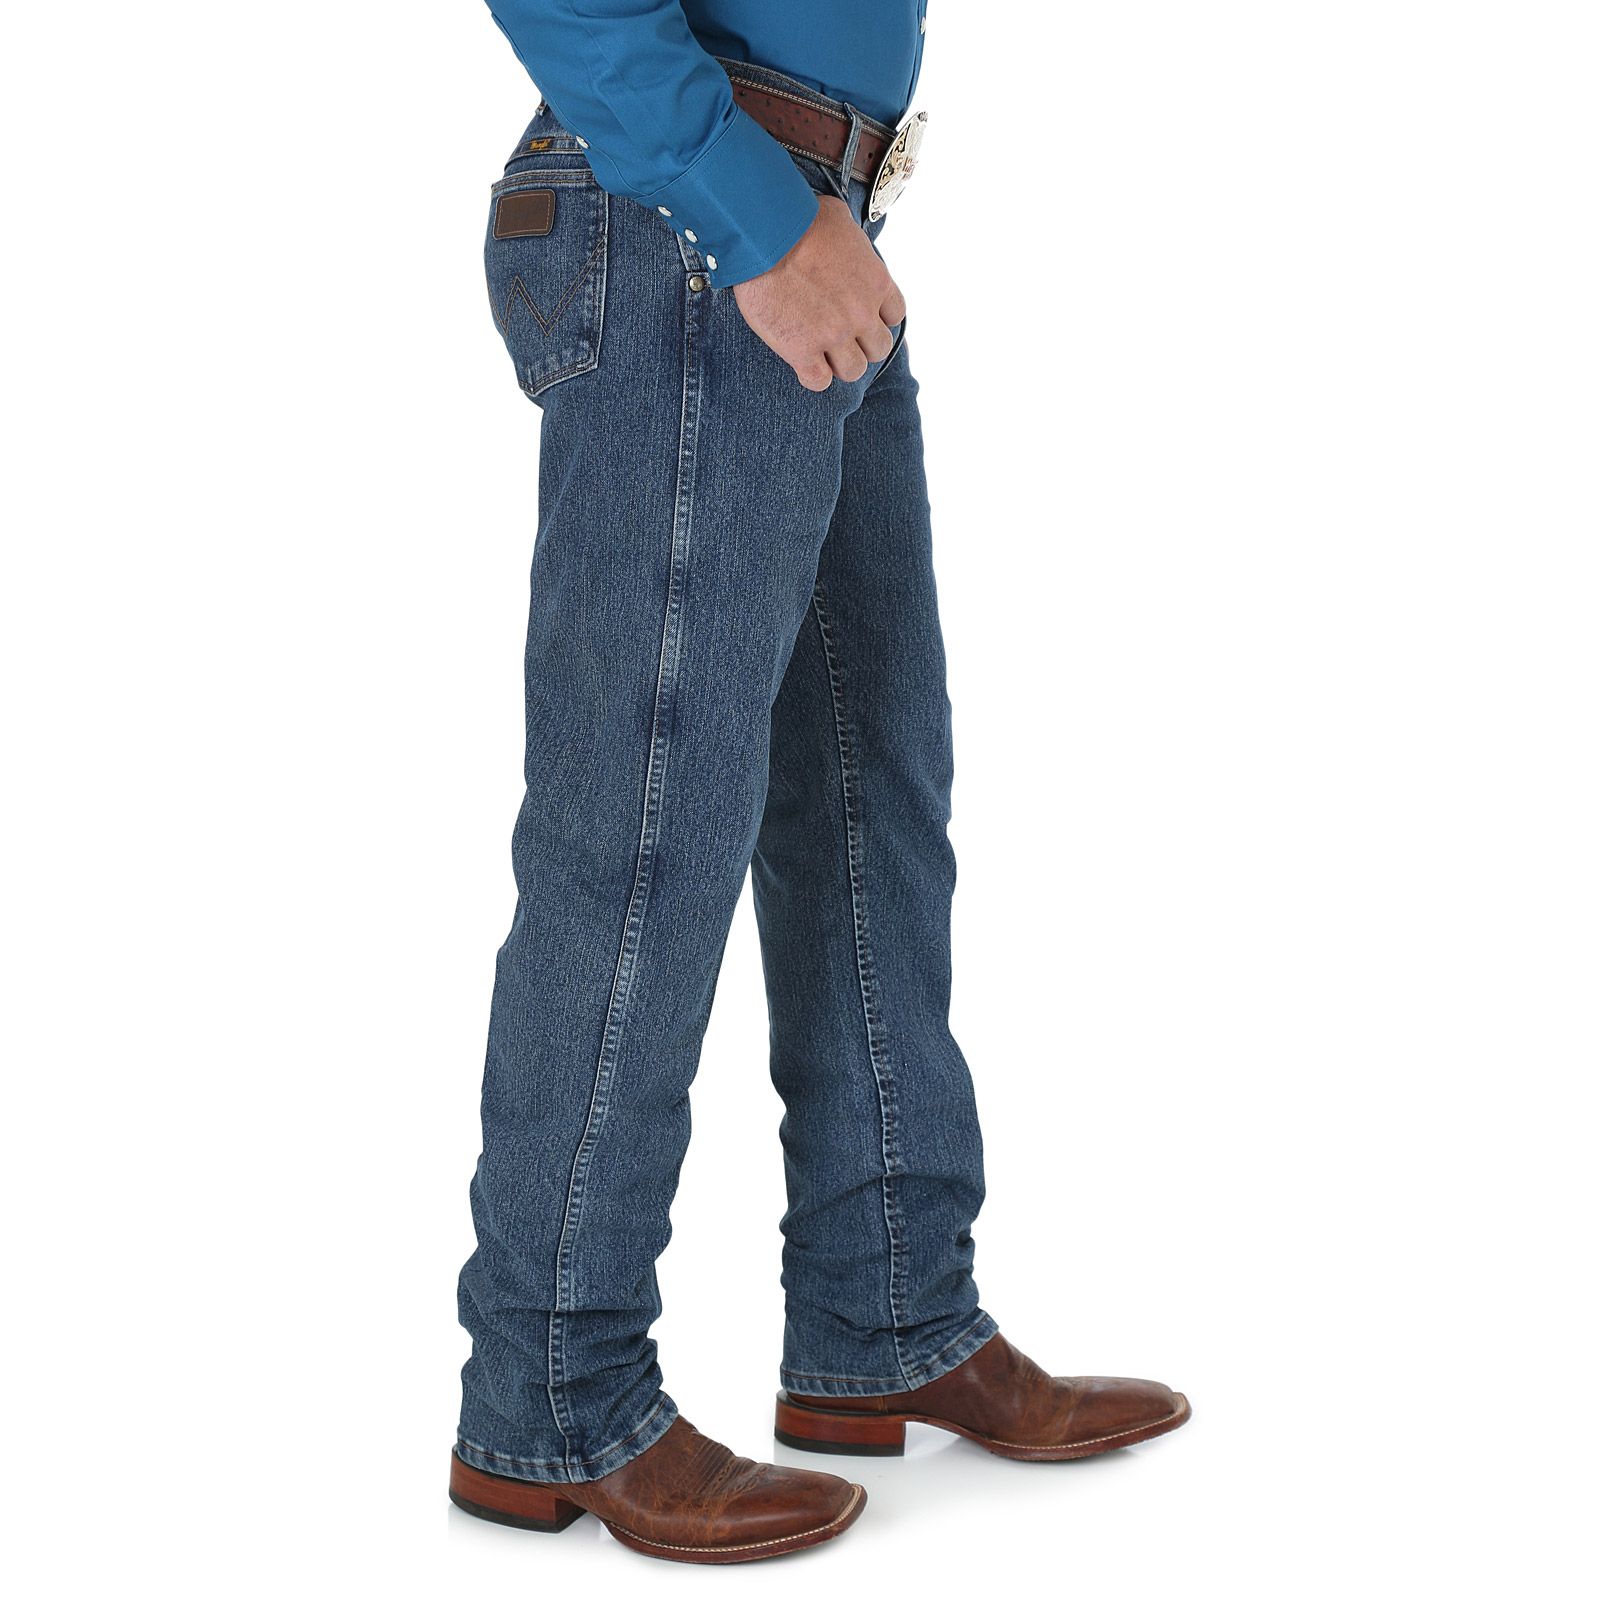 wrangler premium performance advanced comfort jeans